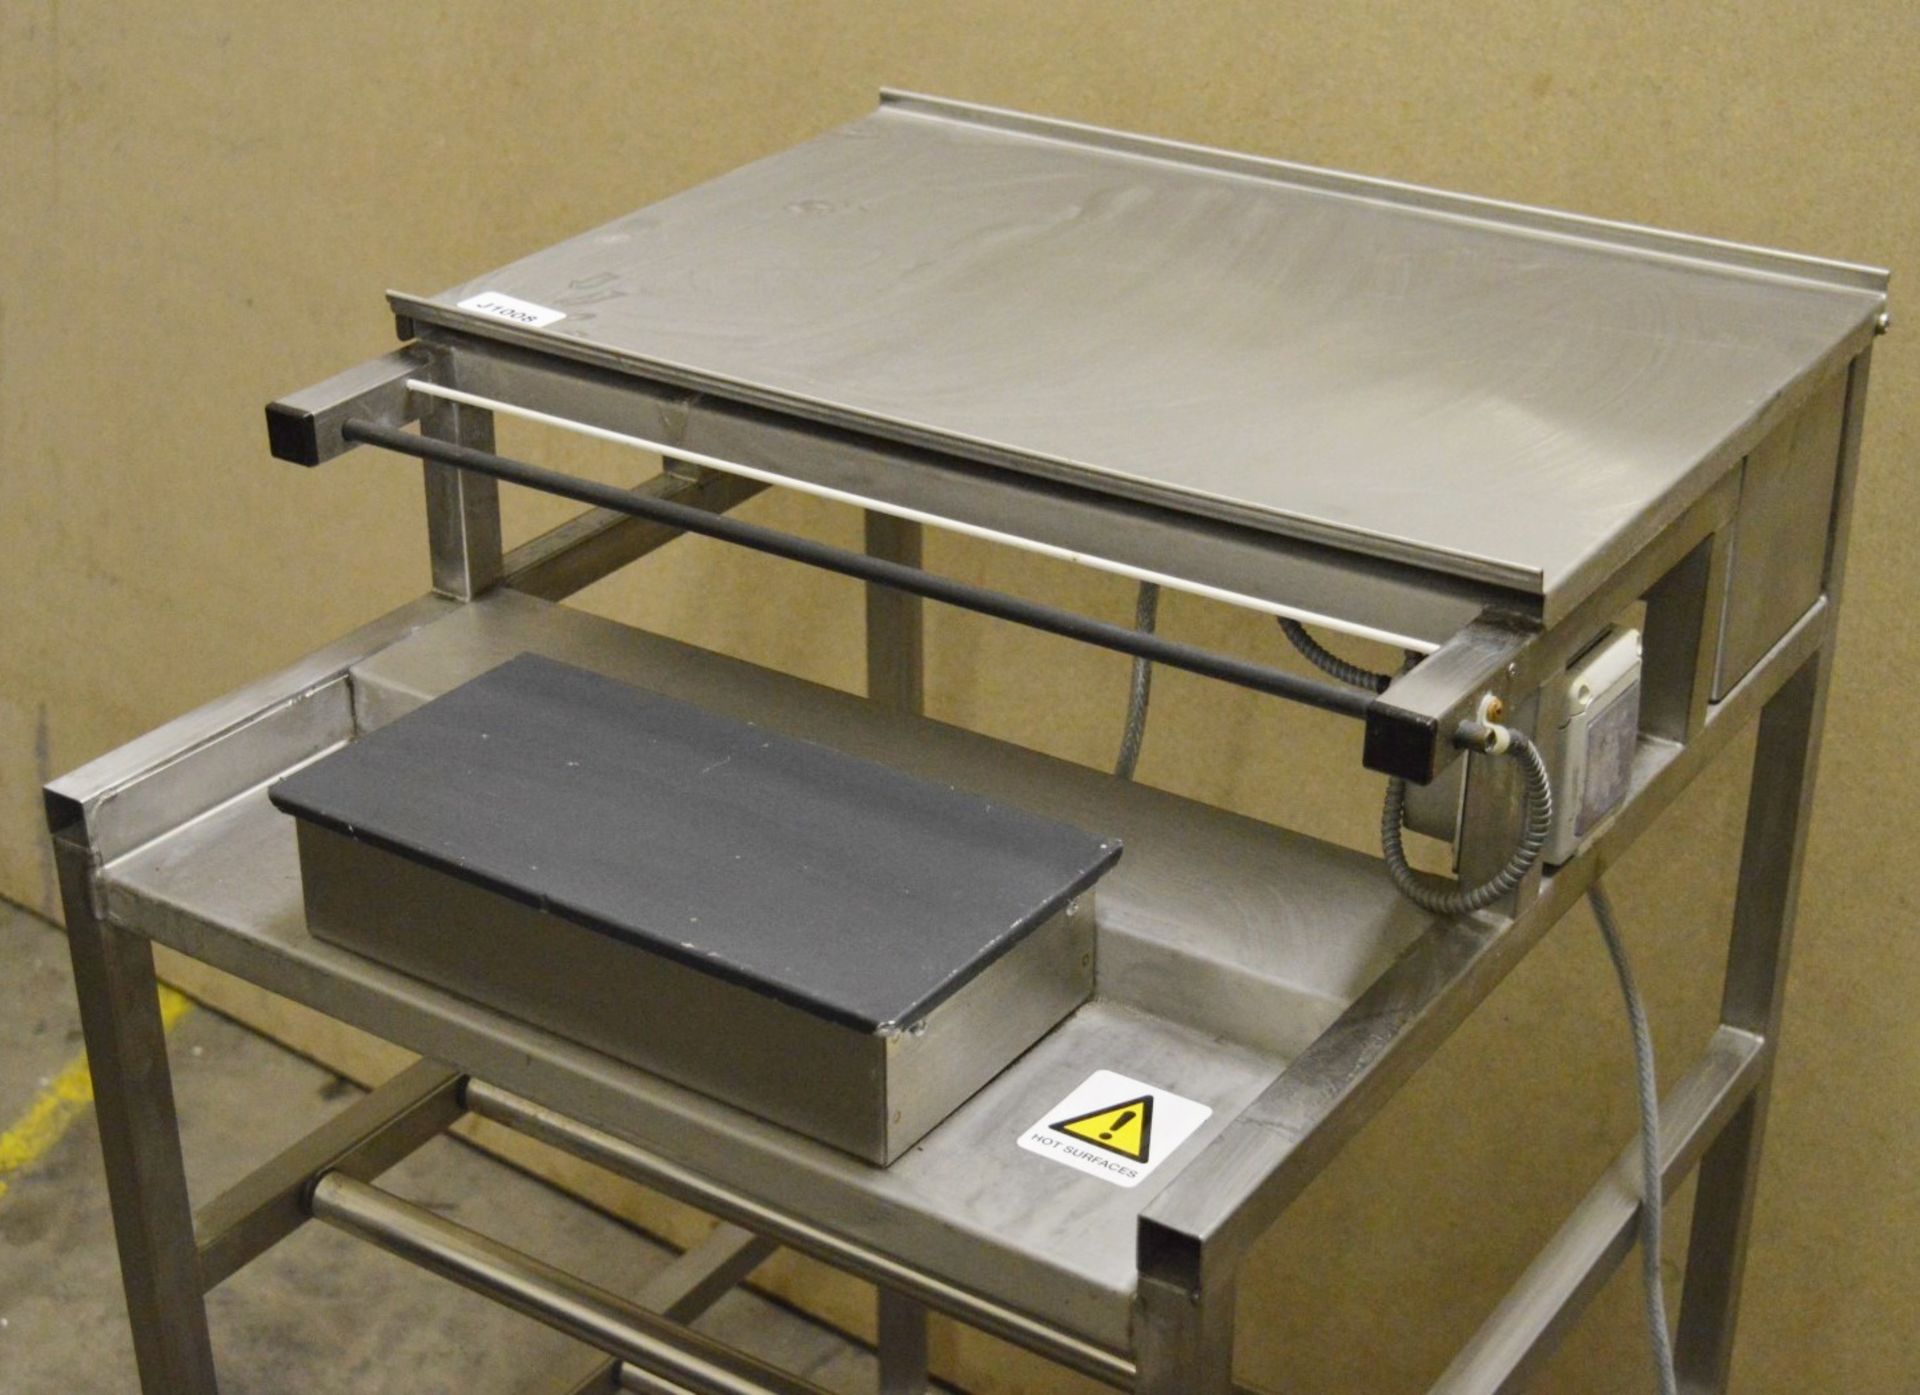 1 x Metalcraft 240v Food Tray Sealer - H98 x W56 x D61 cms - CL282 - Ref J1008 - Location: Bolton - Image 4 of 6